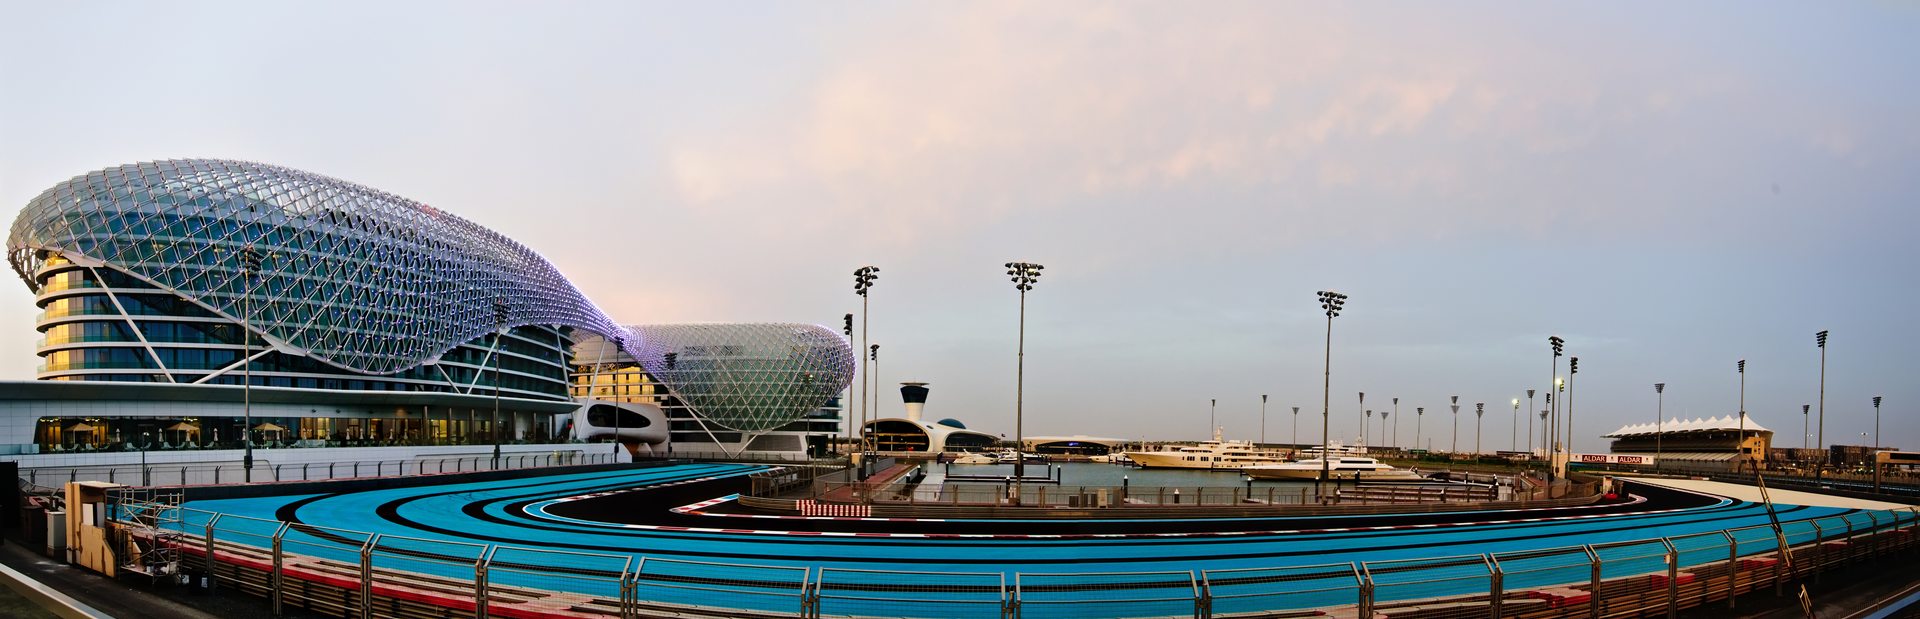 How to do the Abu Dhabi Grand Prix like a VIP